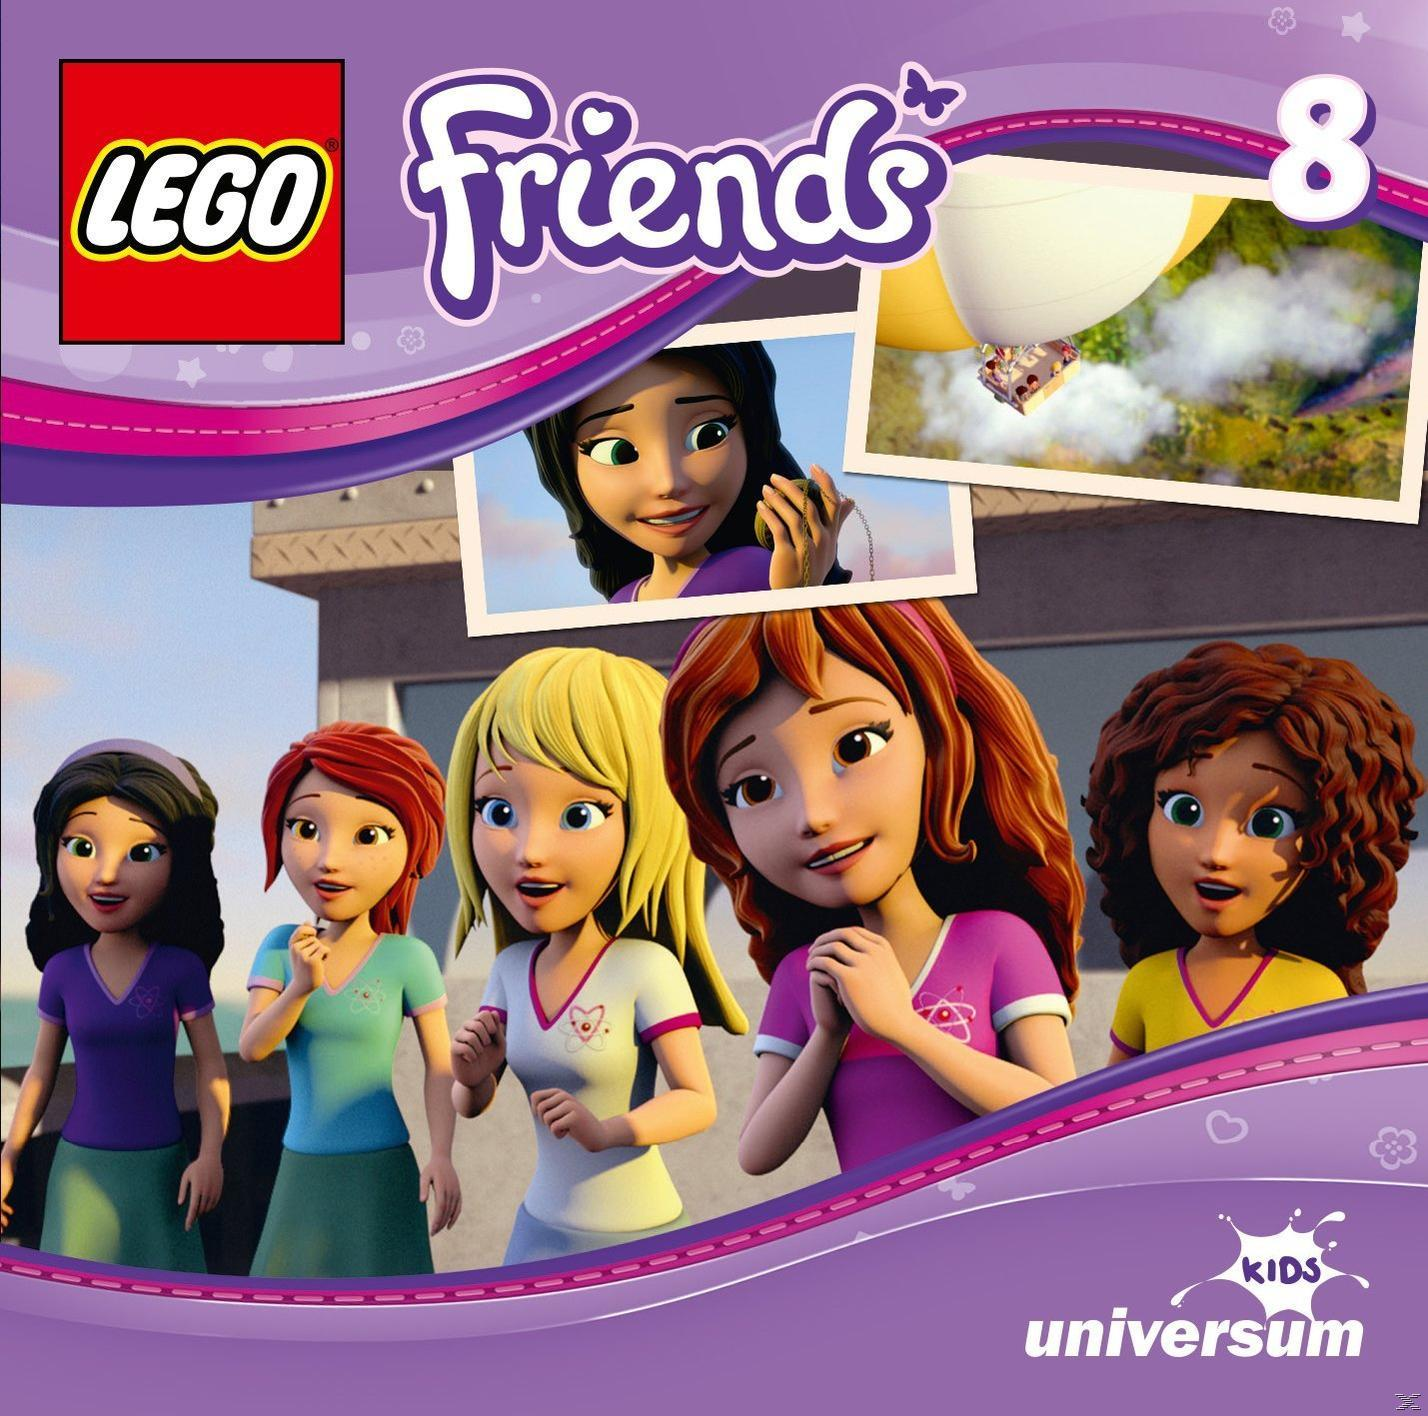 Lego Friends Pirateninsel - - Friends (CD) Die - Lego 8